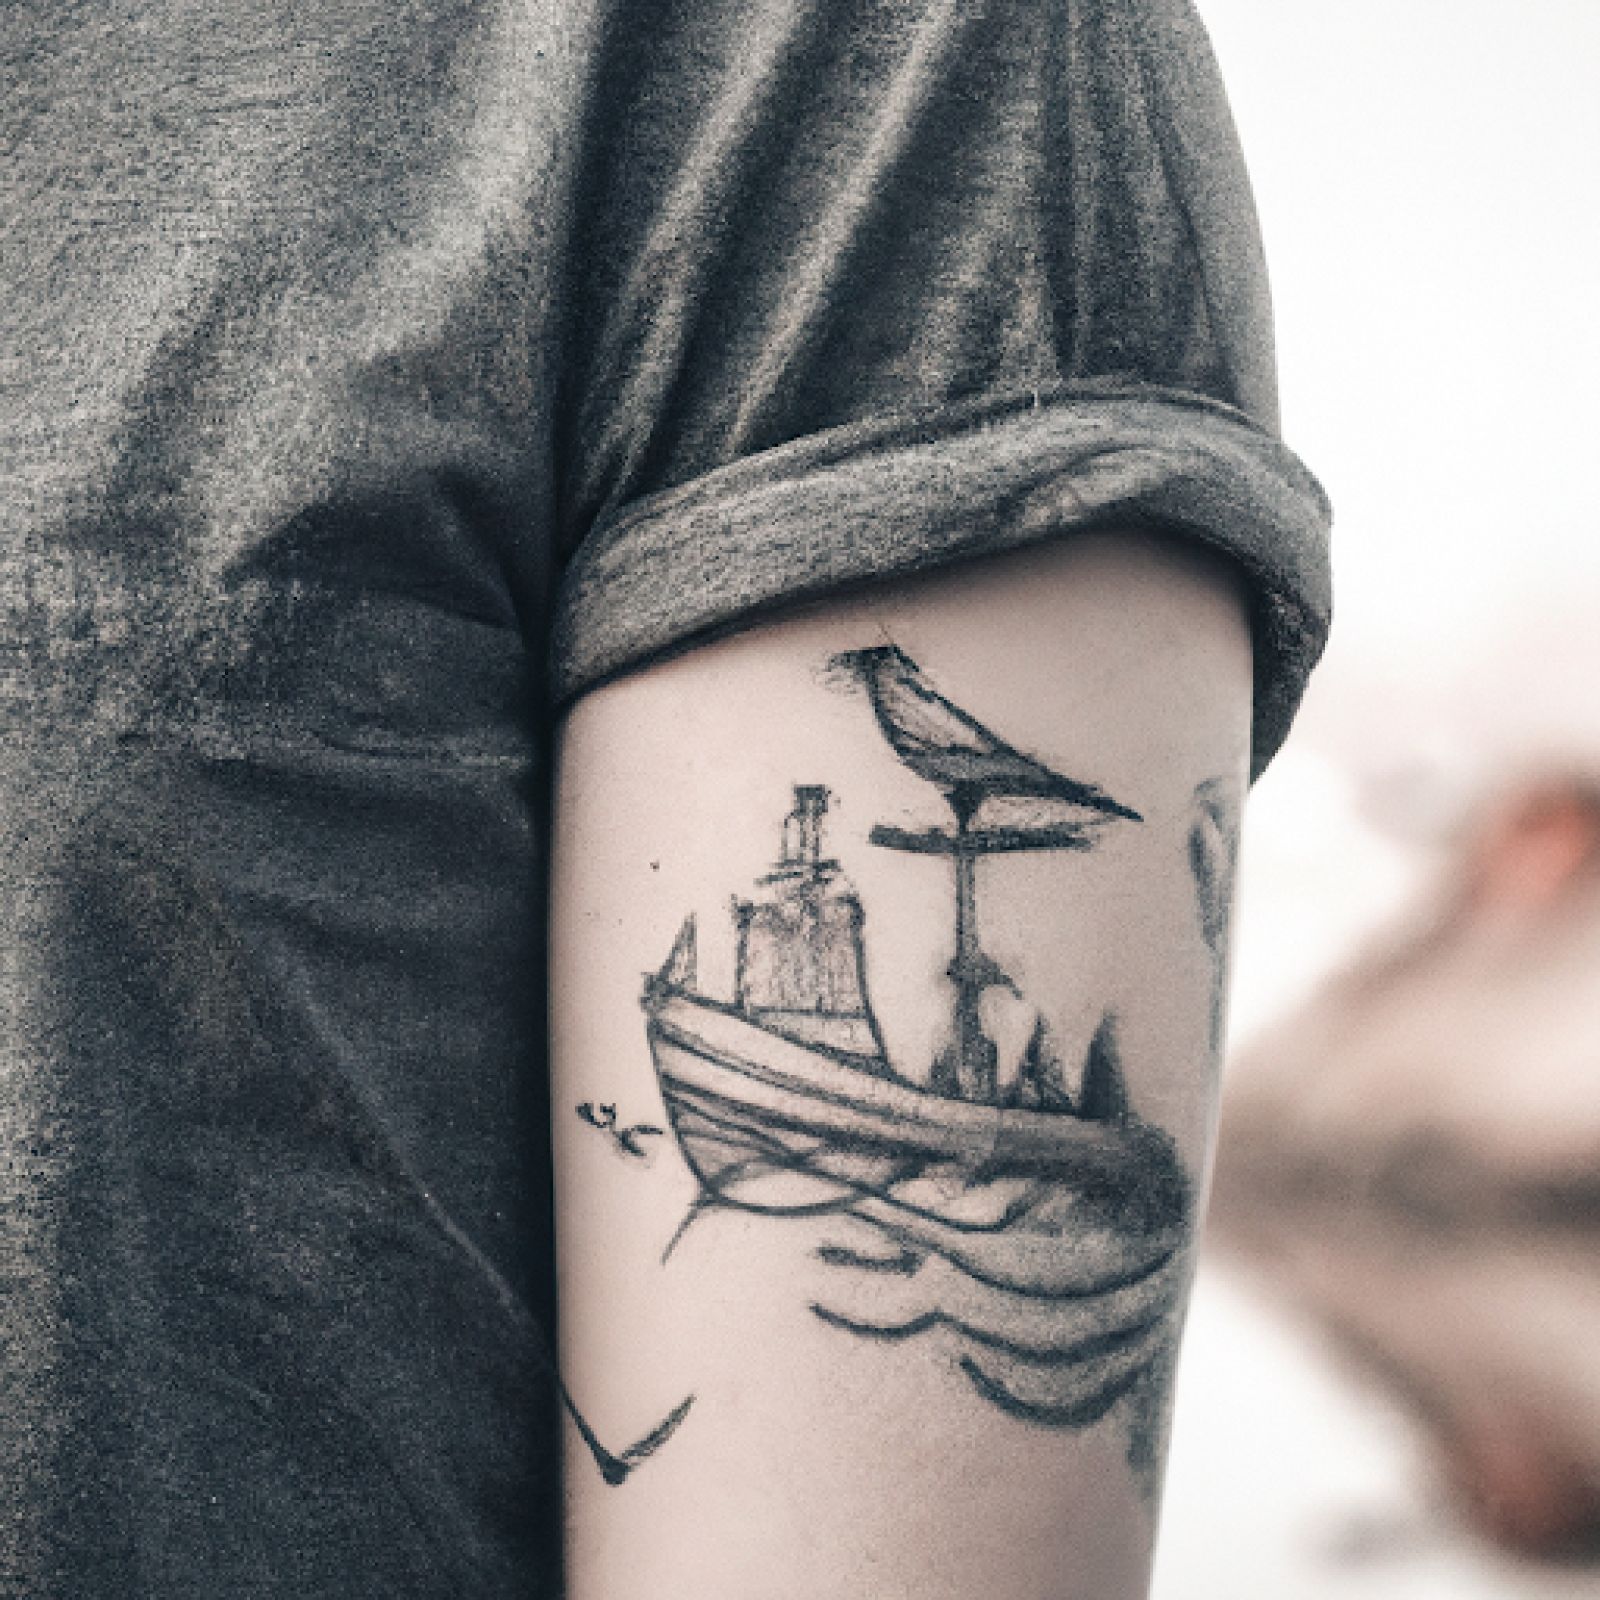 Ship tattoo on chest for men